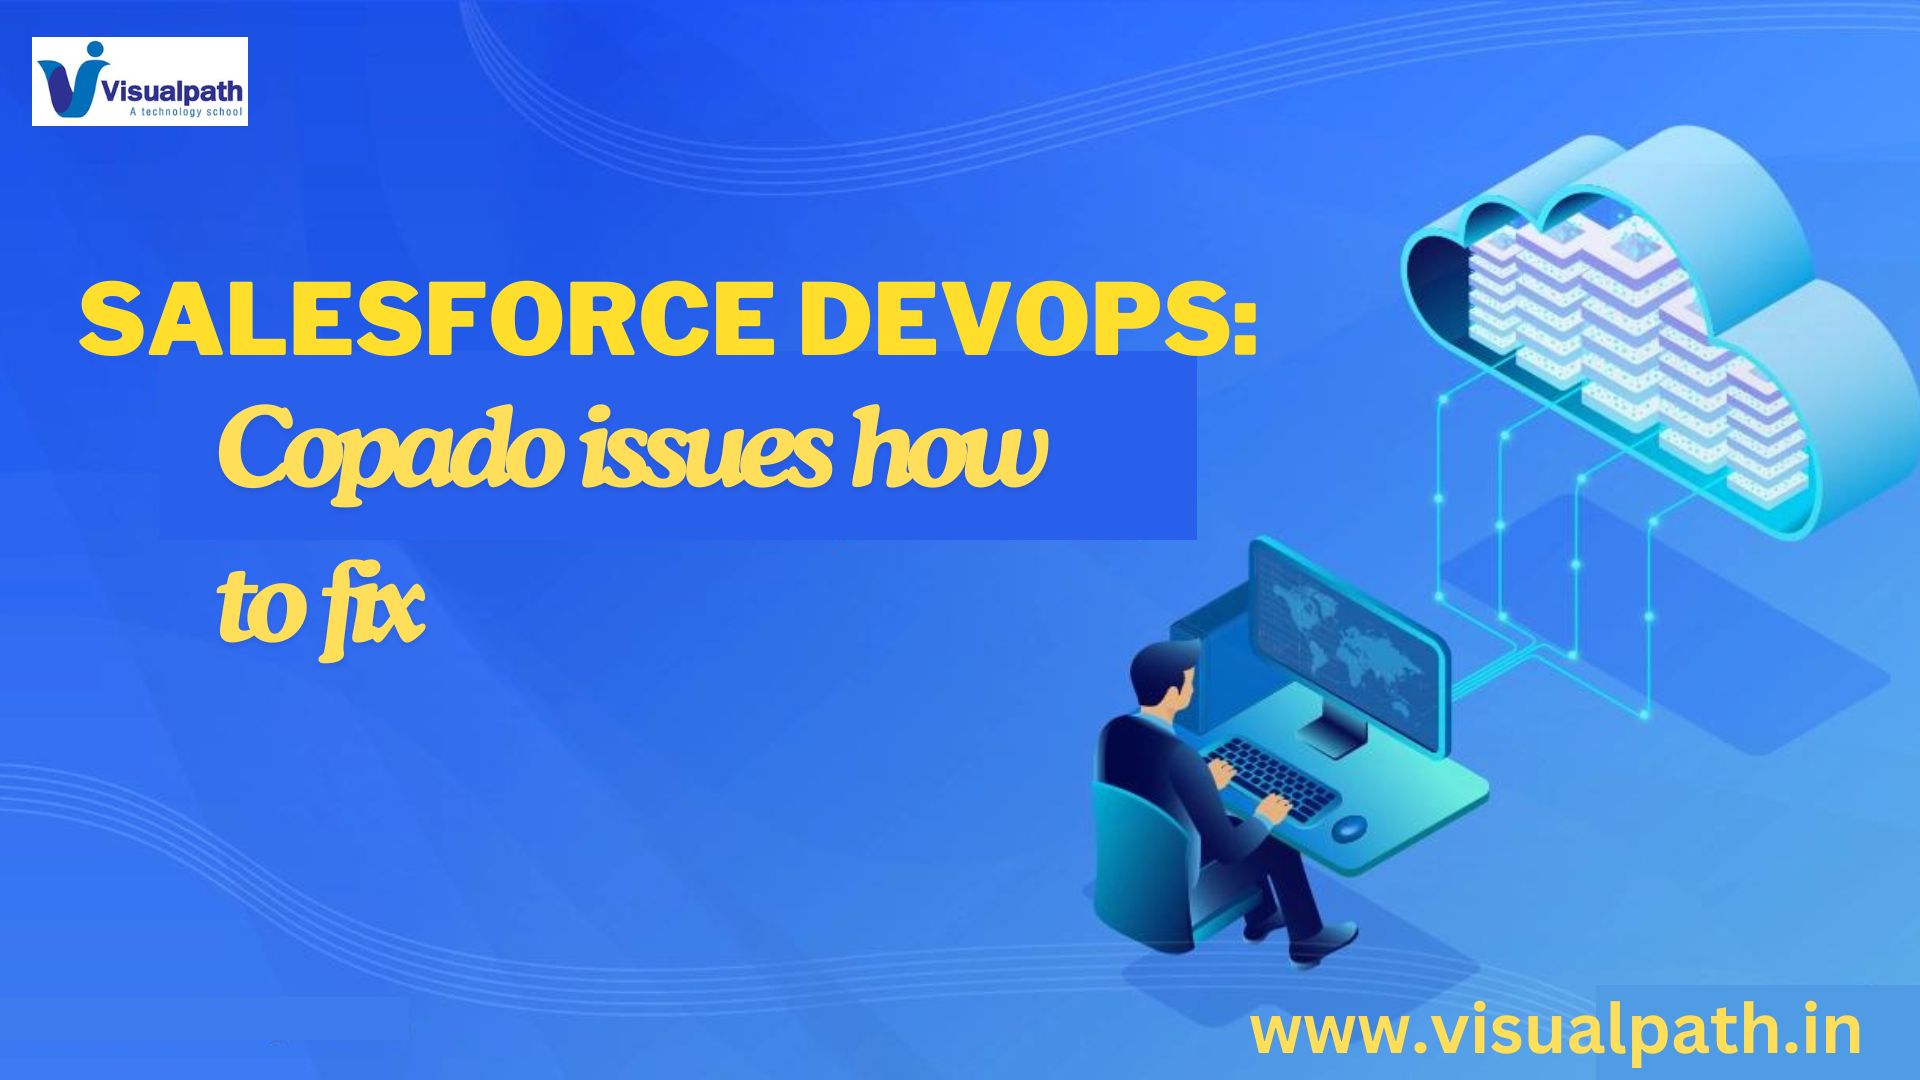 Salesforce DevOps: Copado issues how to fix